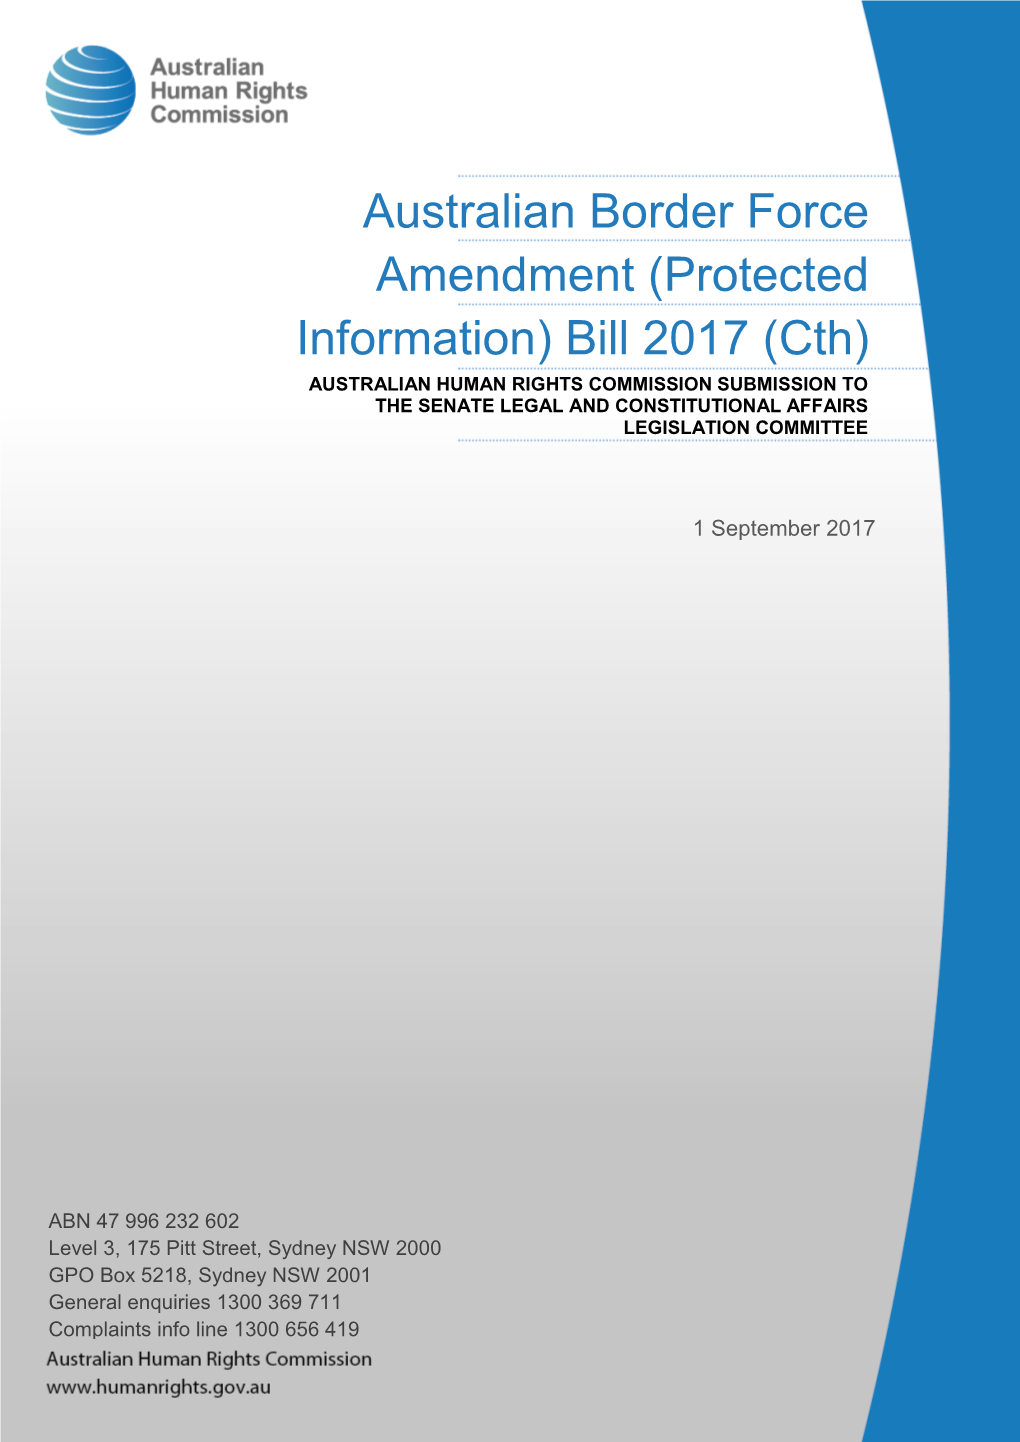 Australian Border Force Amendment (Protected Information) Bill 2017, Senate Inquiry – September 2017